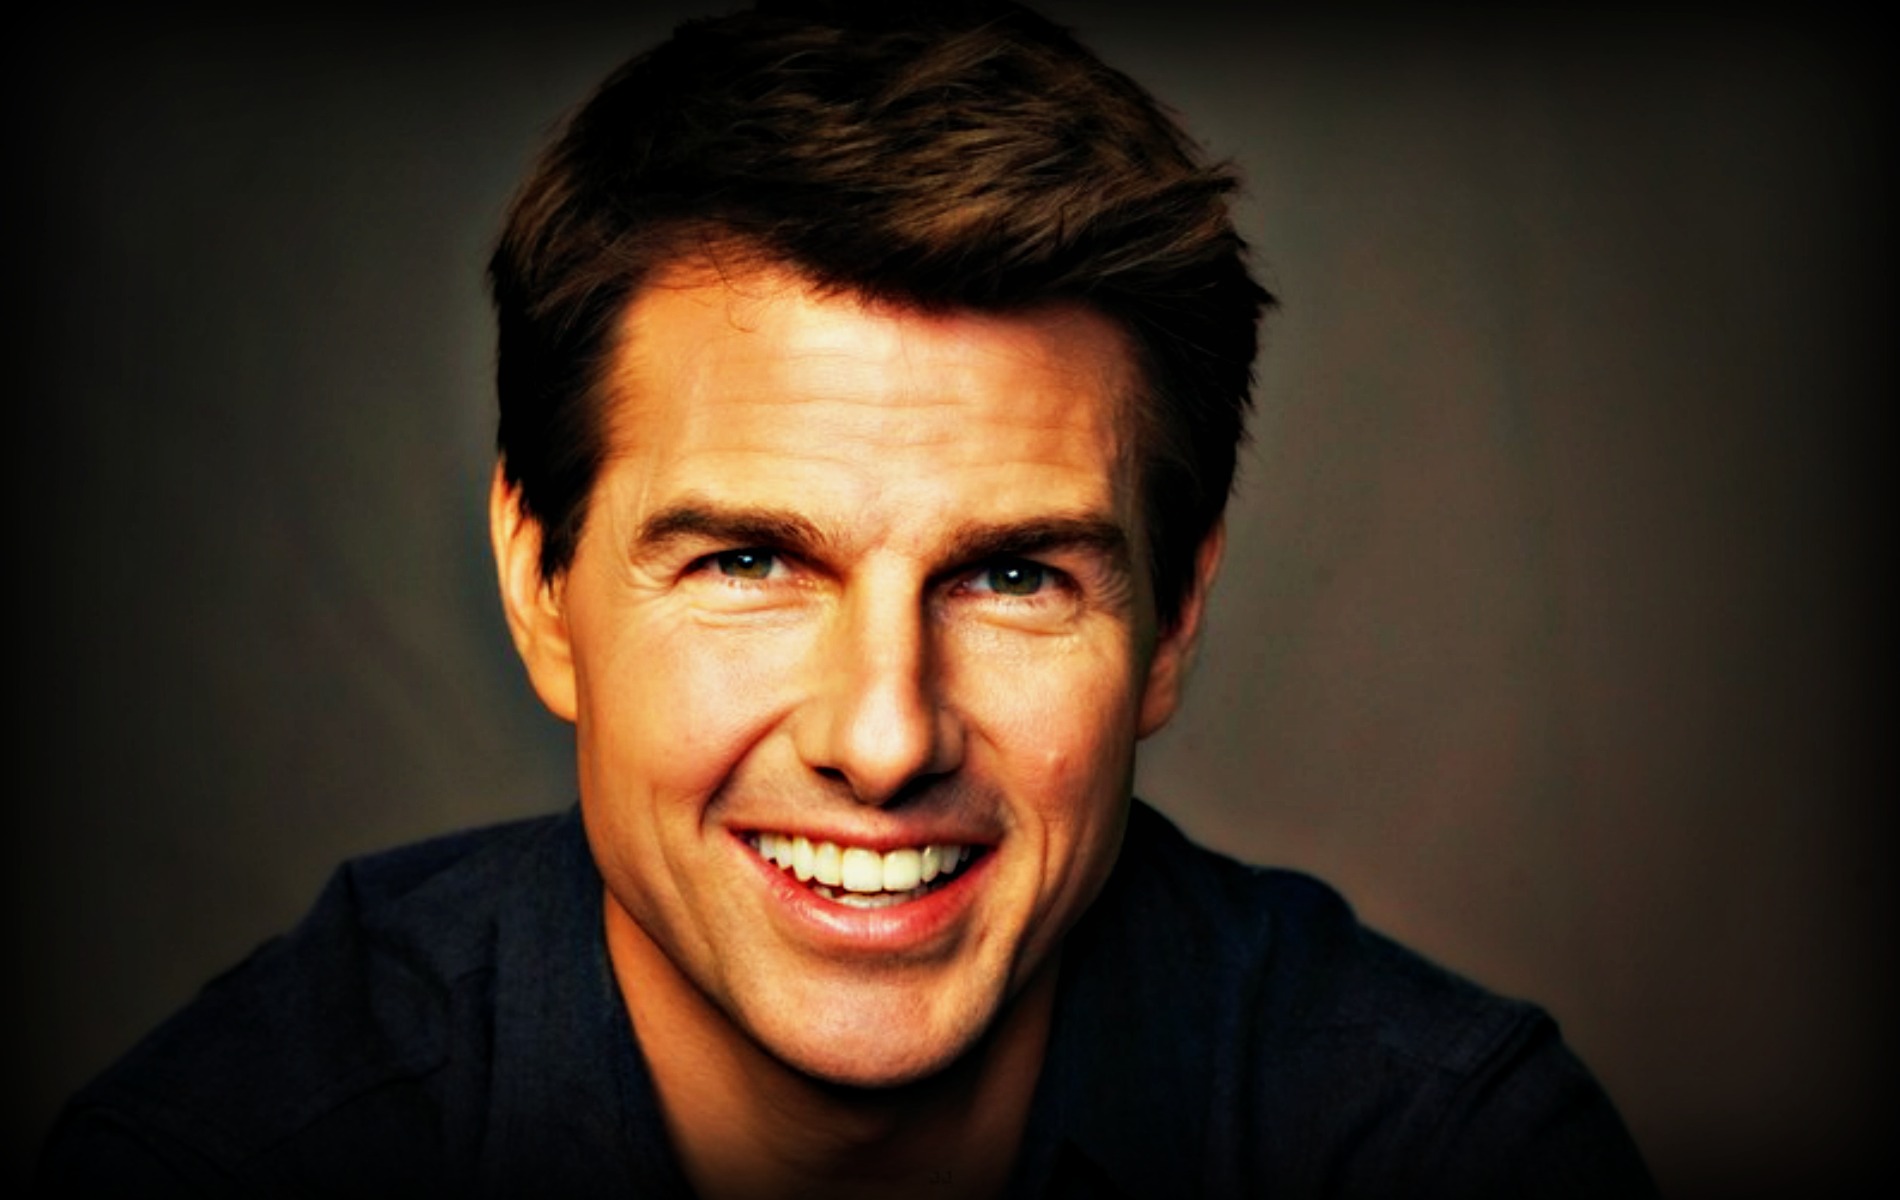 Tom Cruise Wallpaper High Quality